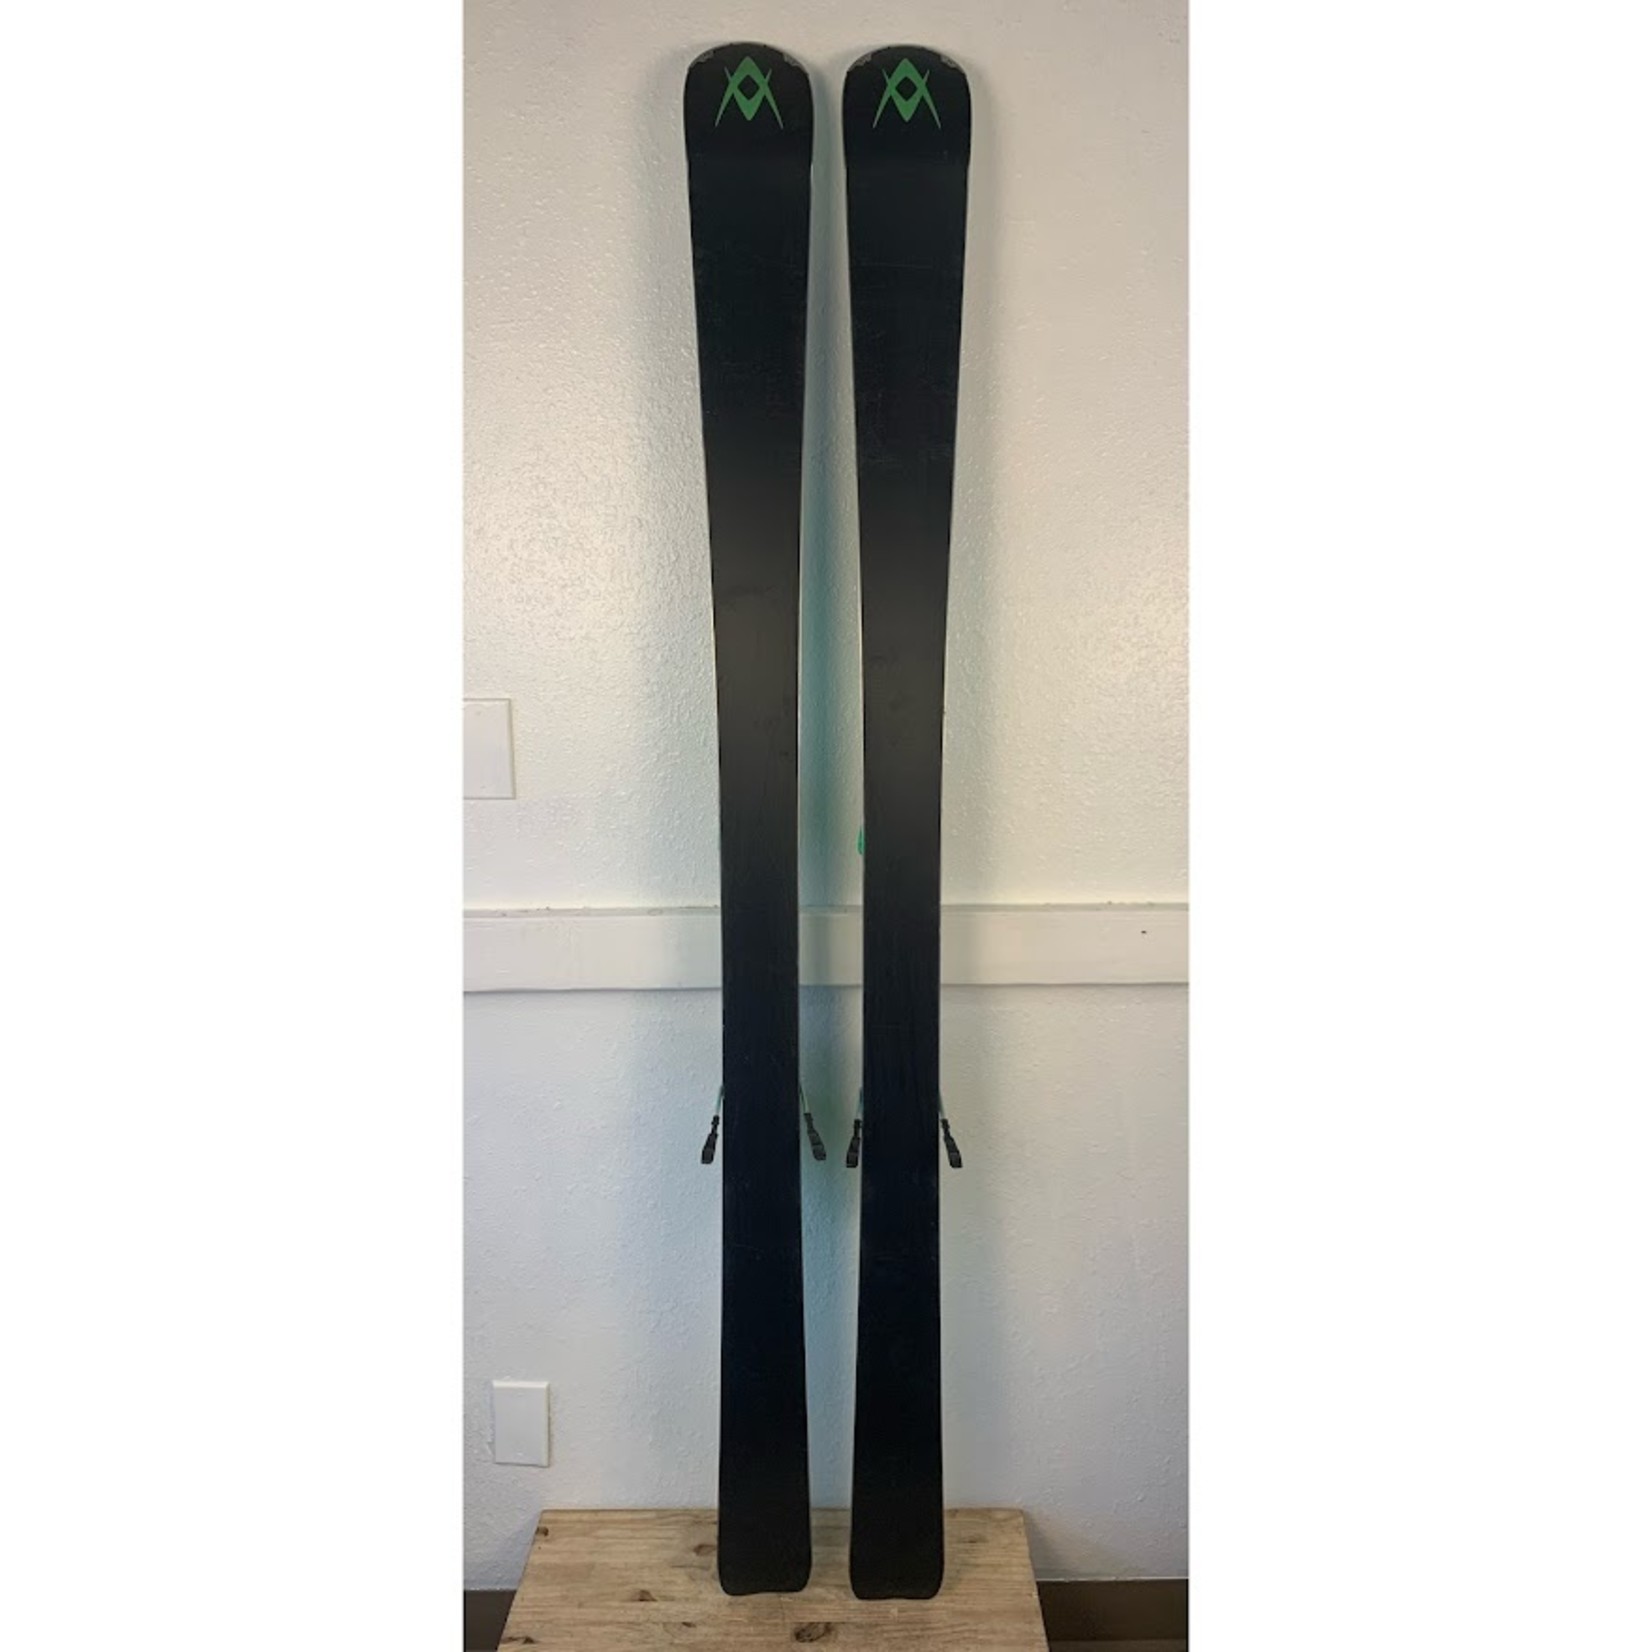 Volkl Volkl RTM 84 Skis + Marker Wide Ride Bindings, Size 171 cm